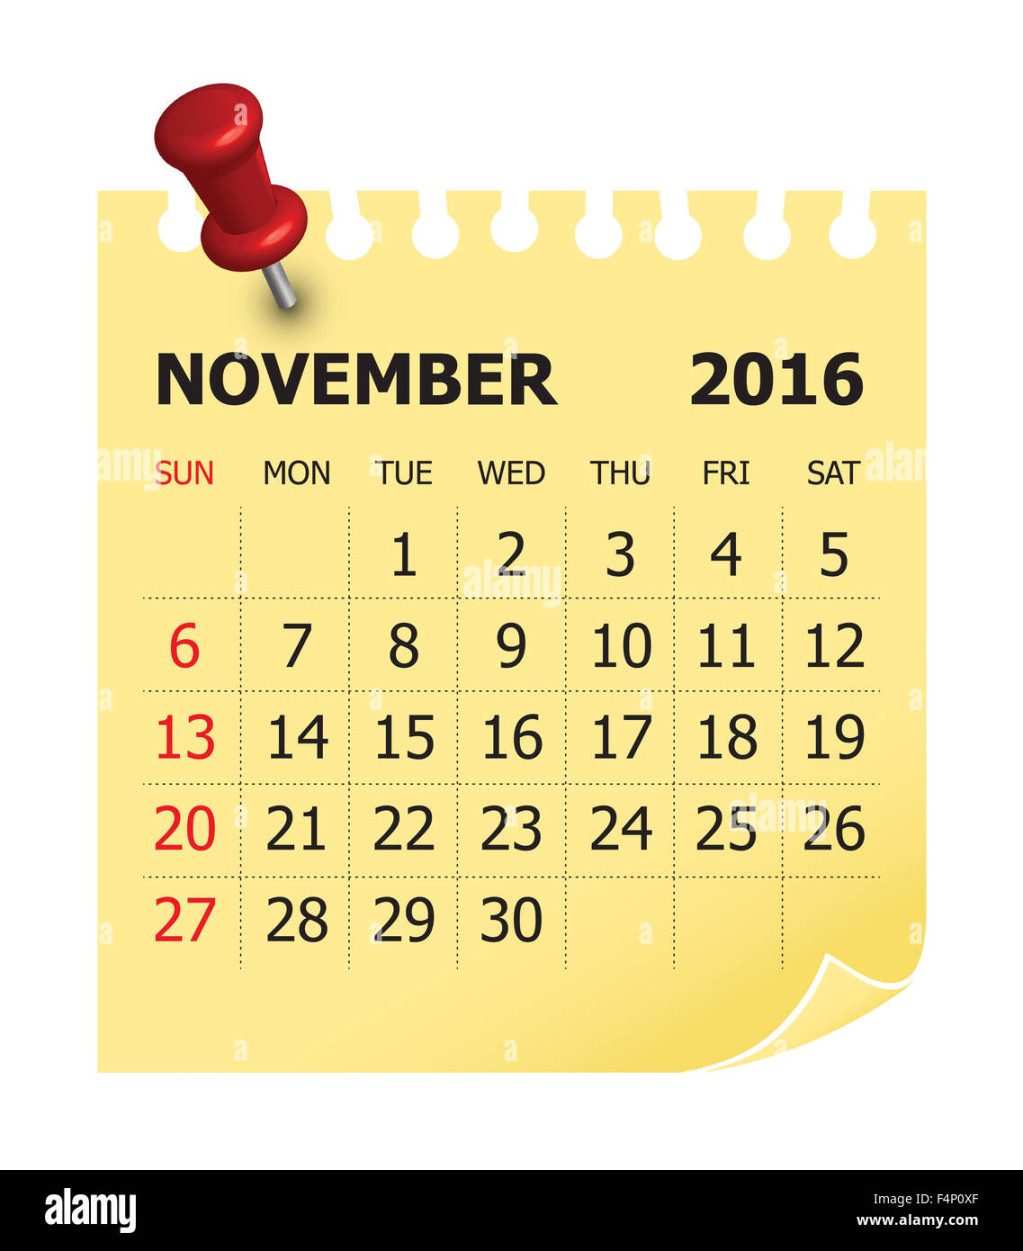 Simple calendar for November  Stock Photo - Alamy